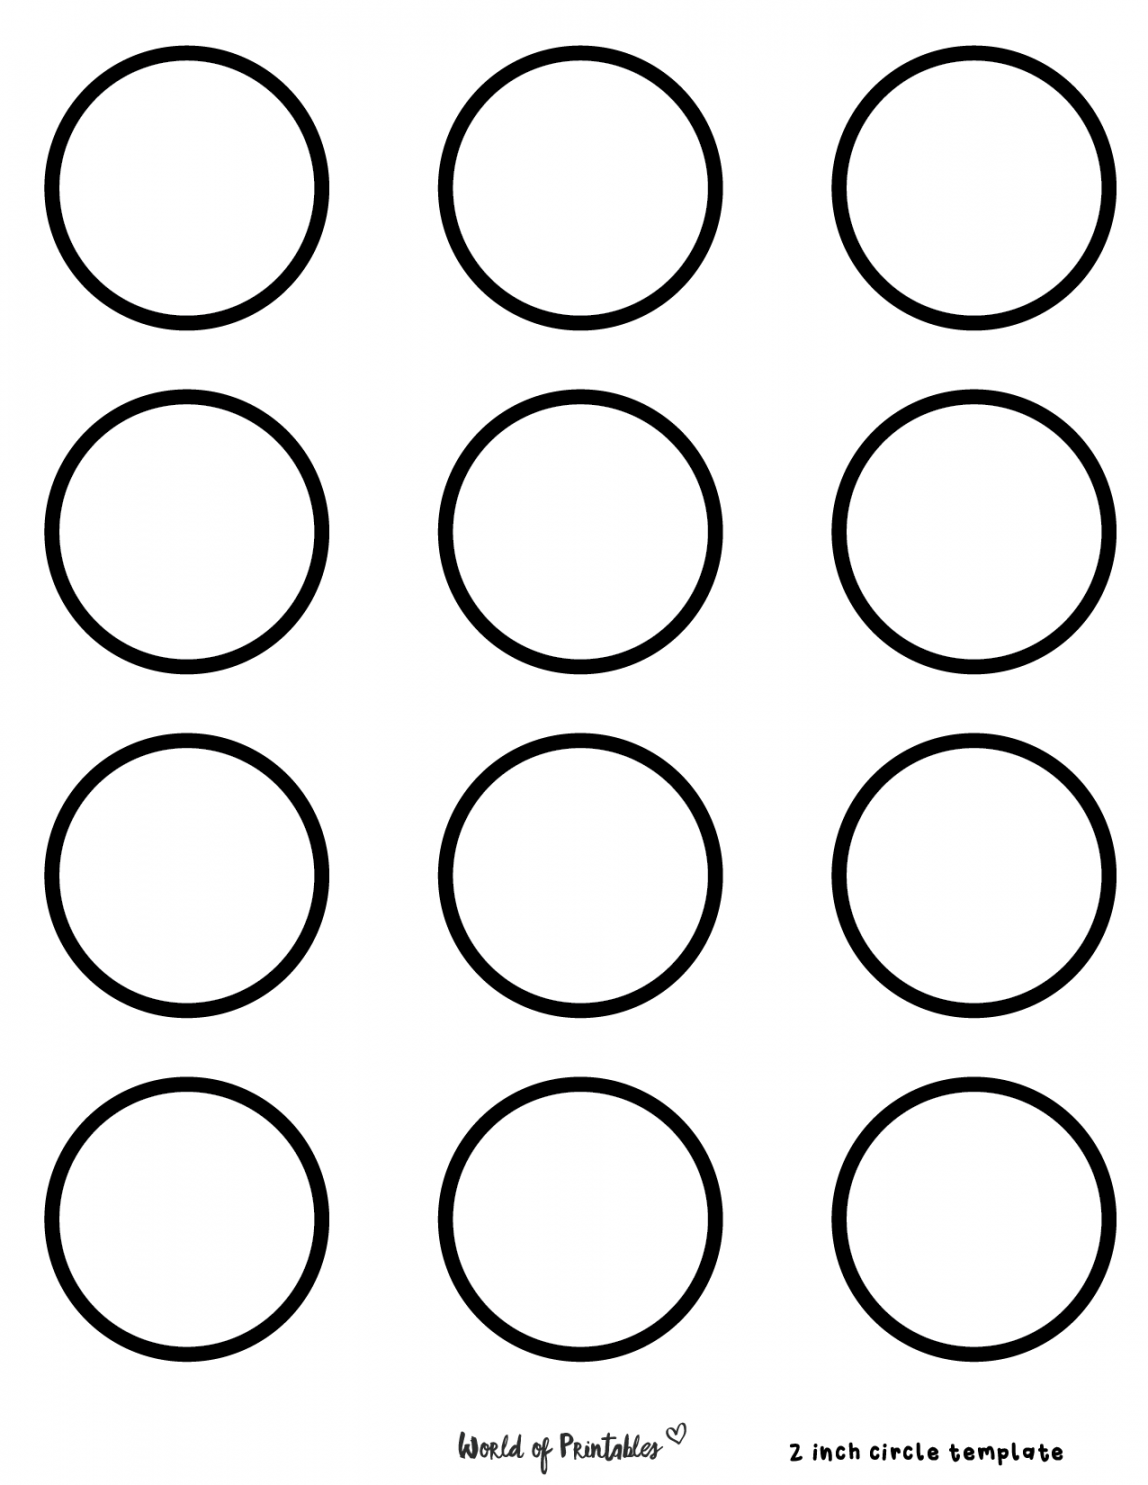 Free Printable Circle Templates - Various Sizes - World of Printables - FREE Printables - Printable Circles